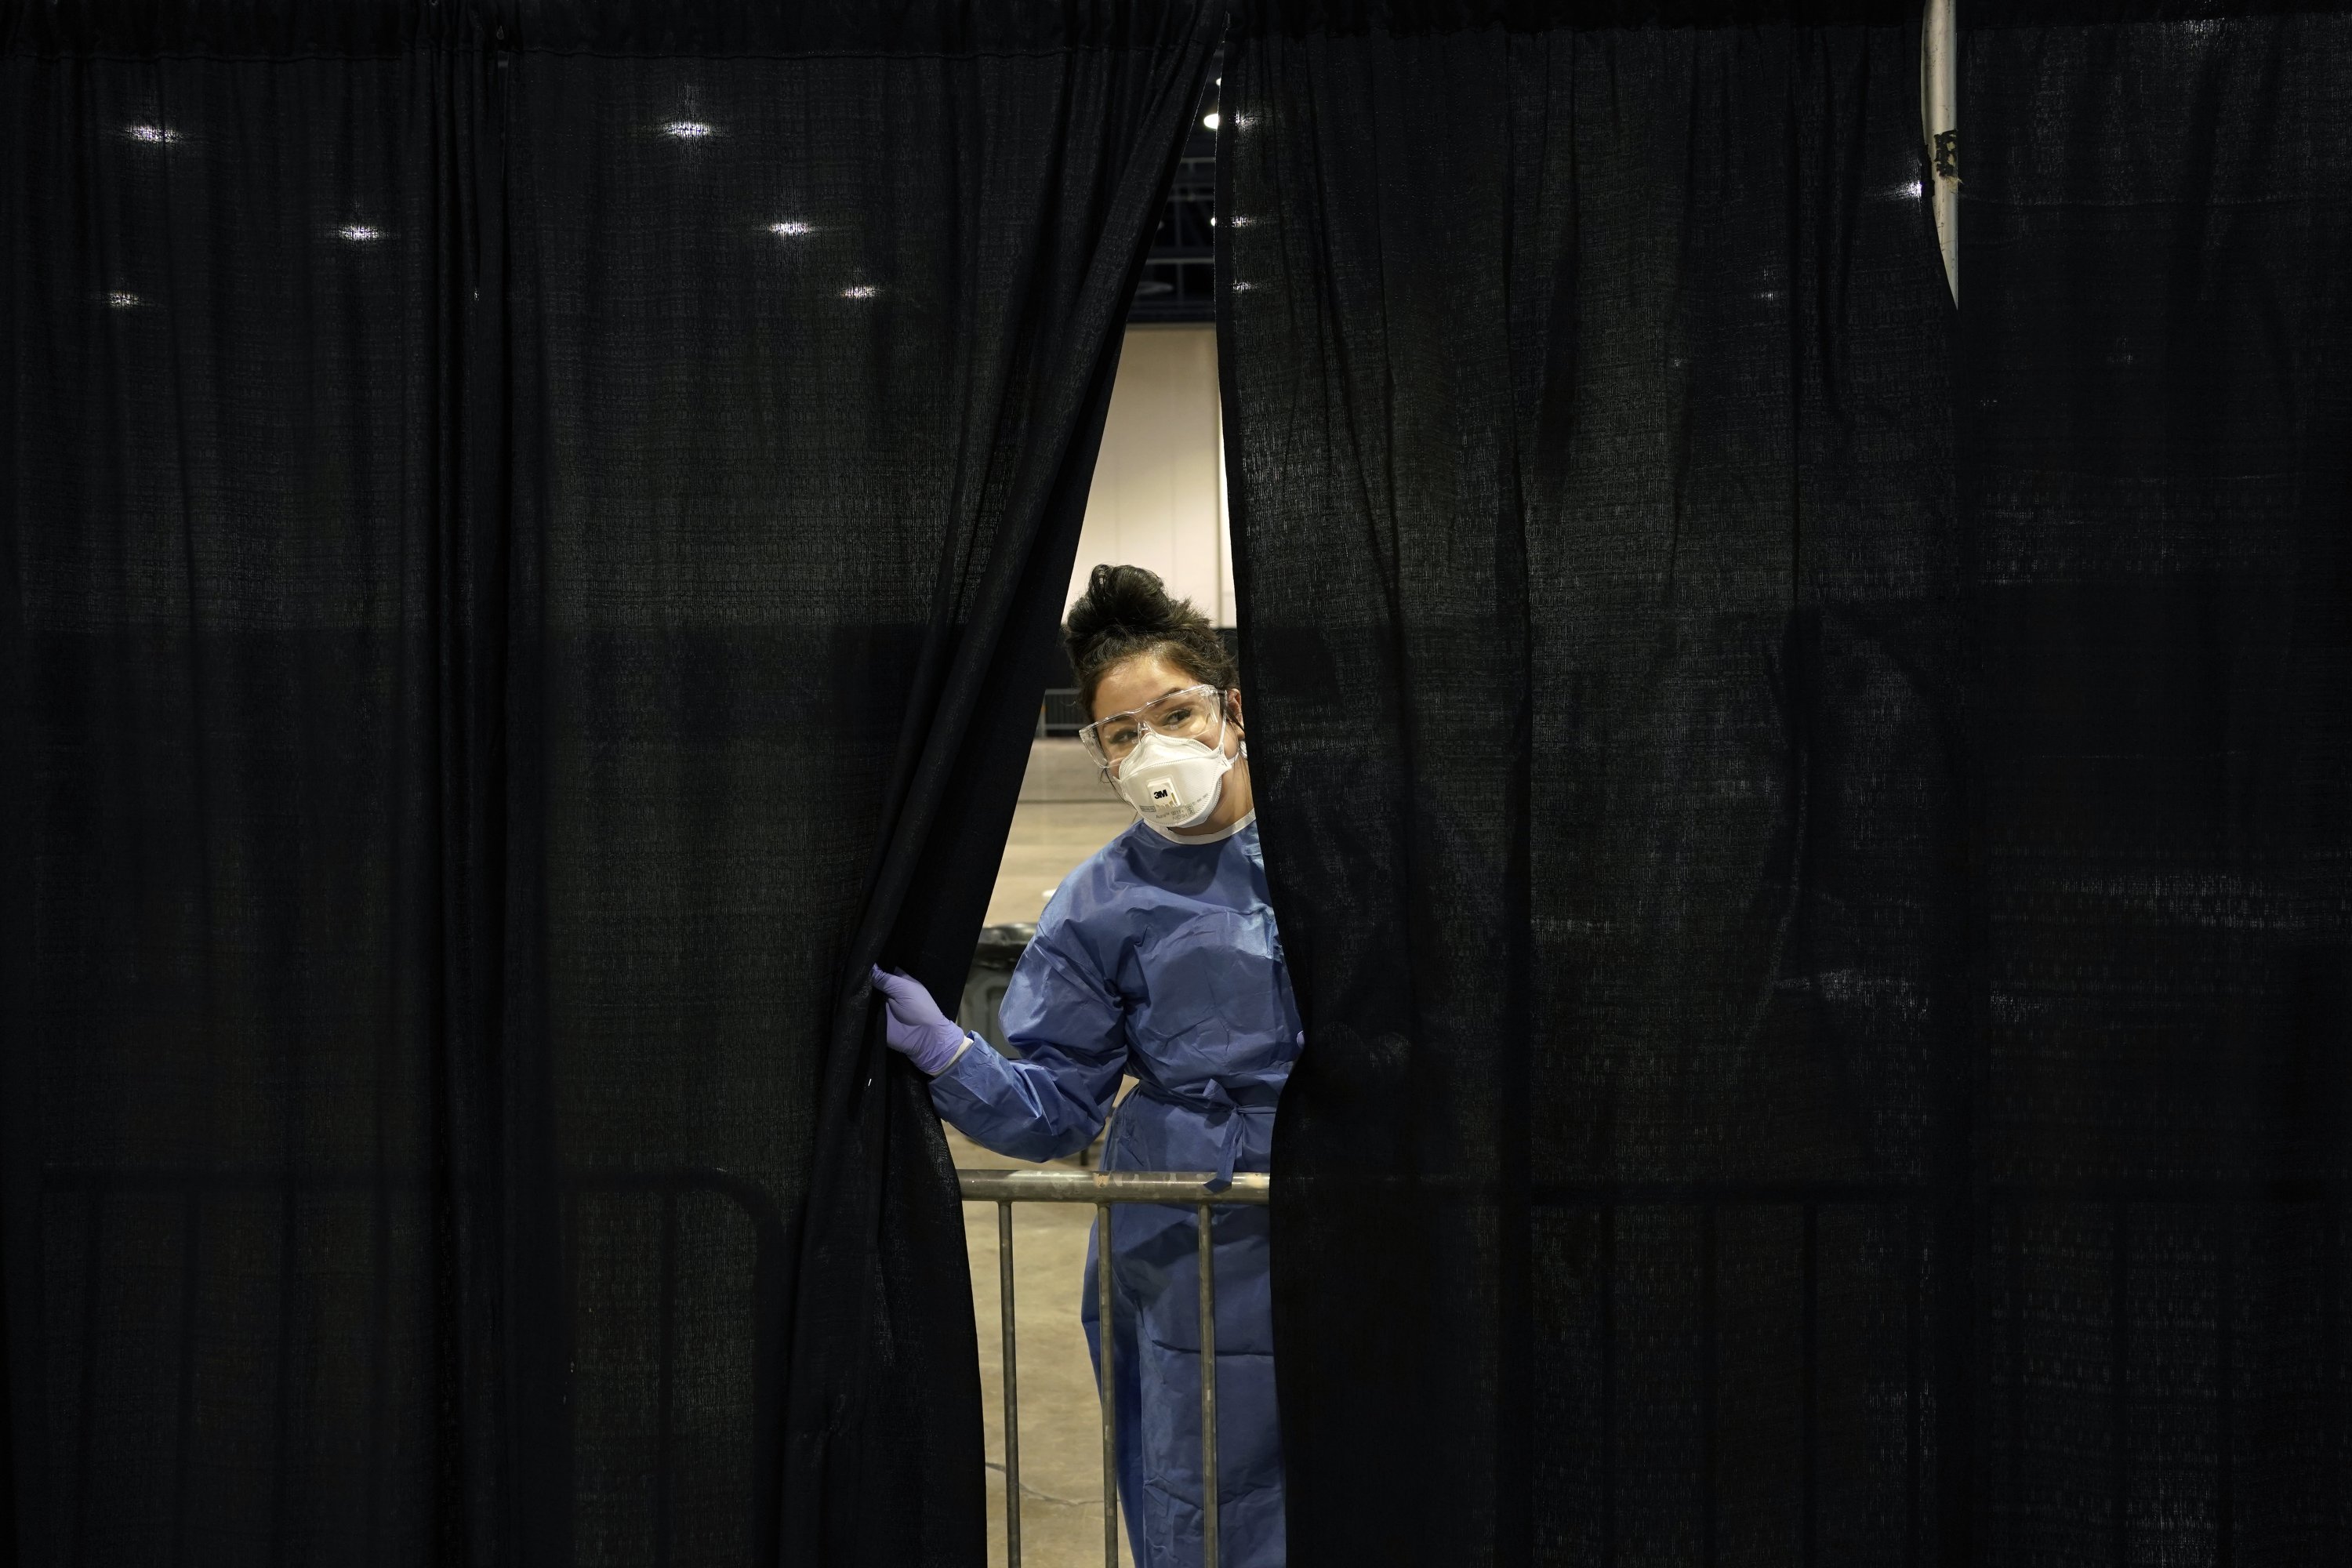 'Too many are selfish': US nears 5 million virus cases - The Associated Press